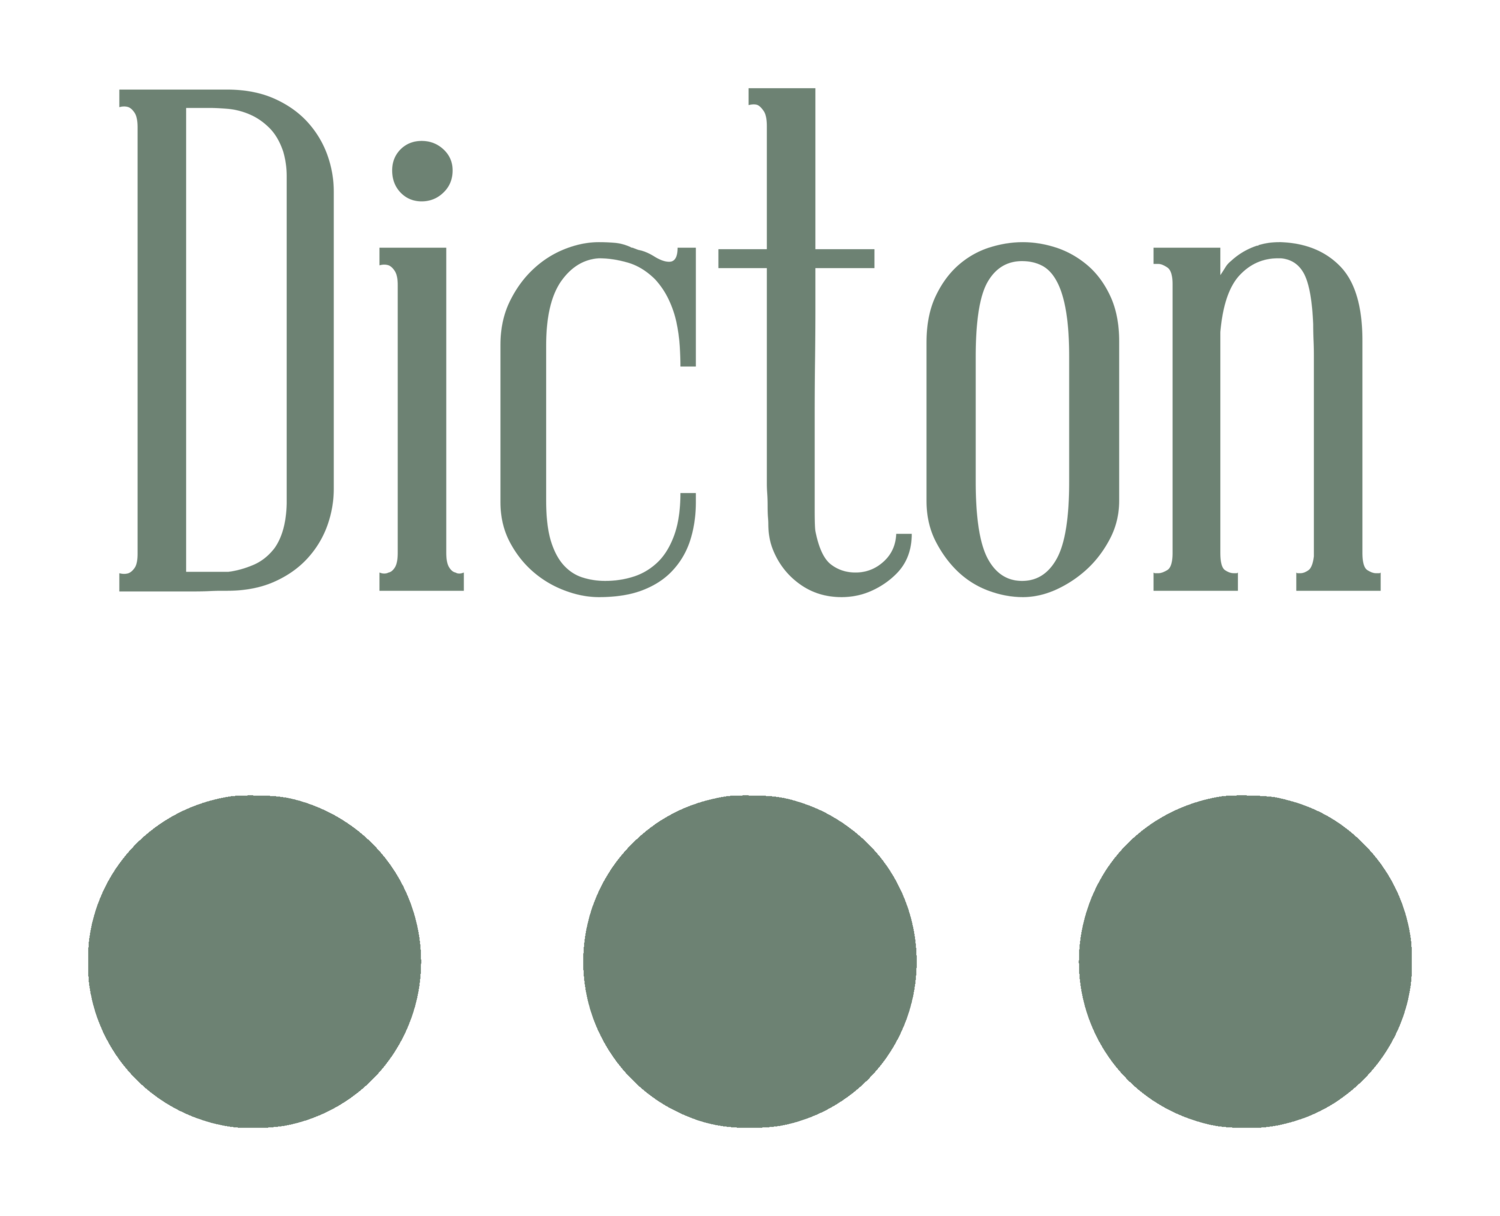 Dicton